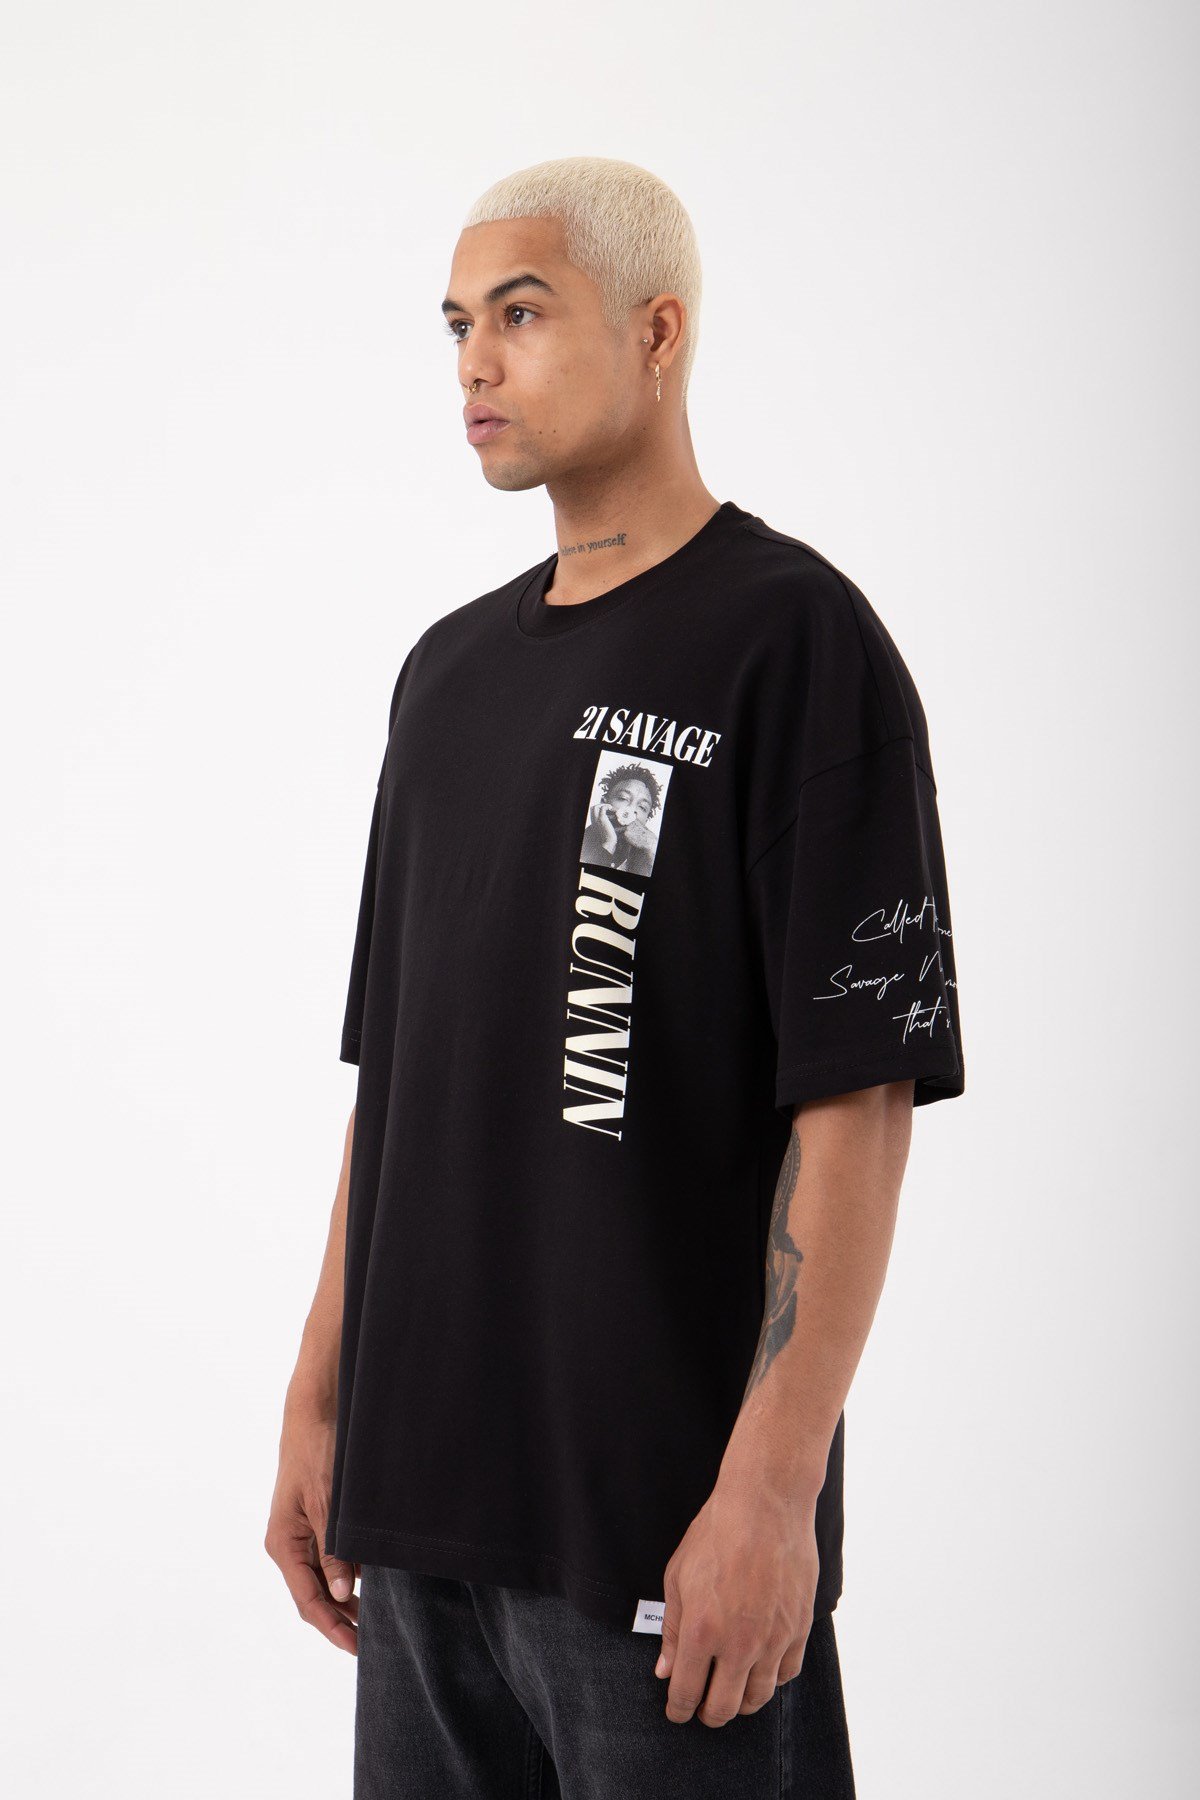 Oversize 21 Savage Printed Cotton T-Shirt Black